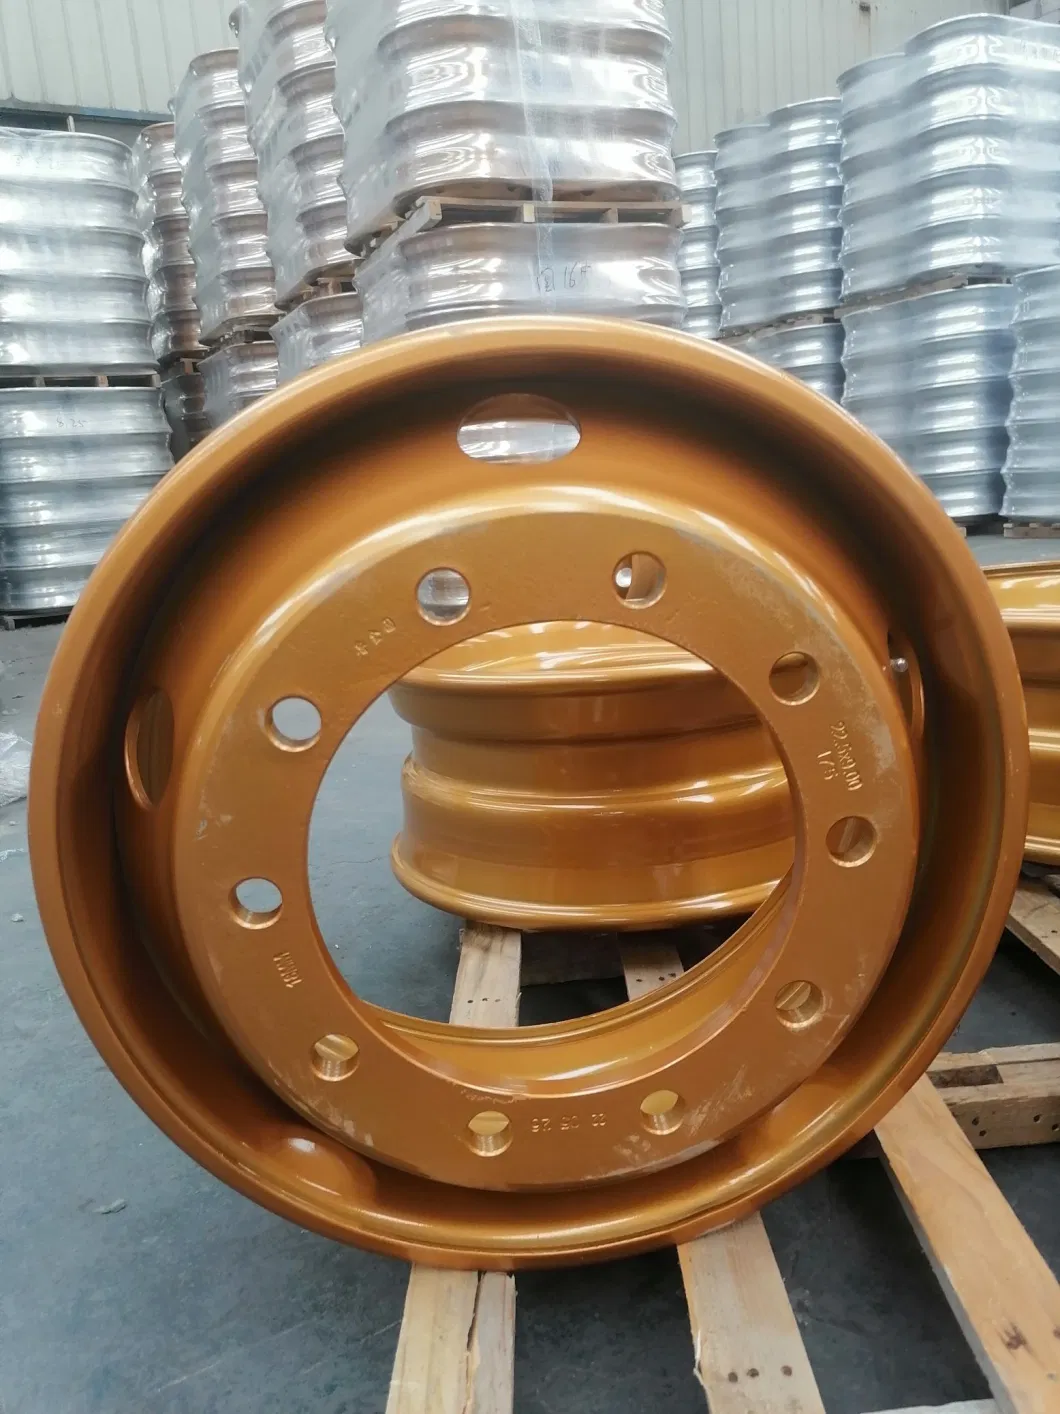 Light Weight Rims / Alloy / Aluminum Wheel/Forged Aluminum Wheels (22.5*7.5)